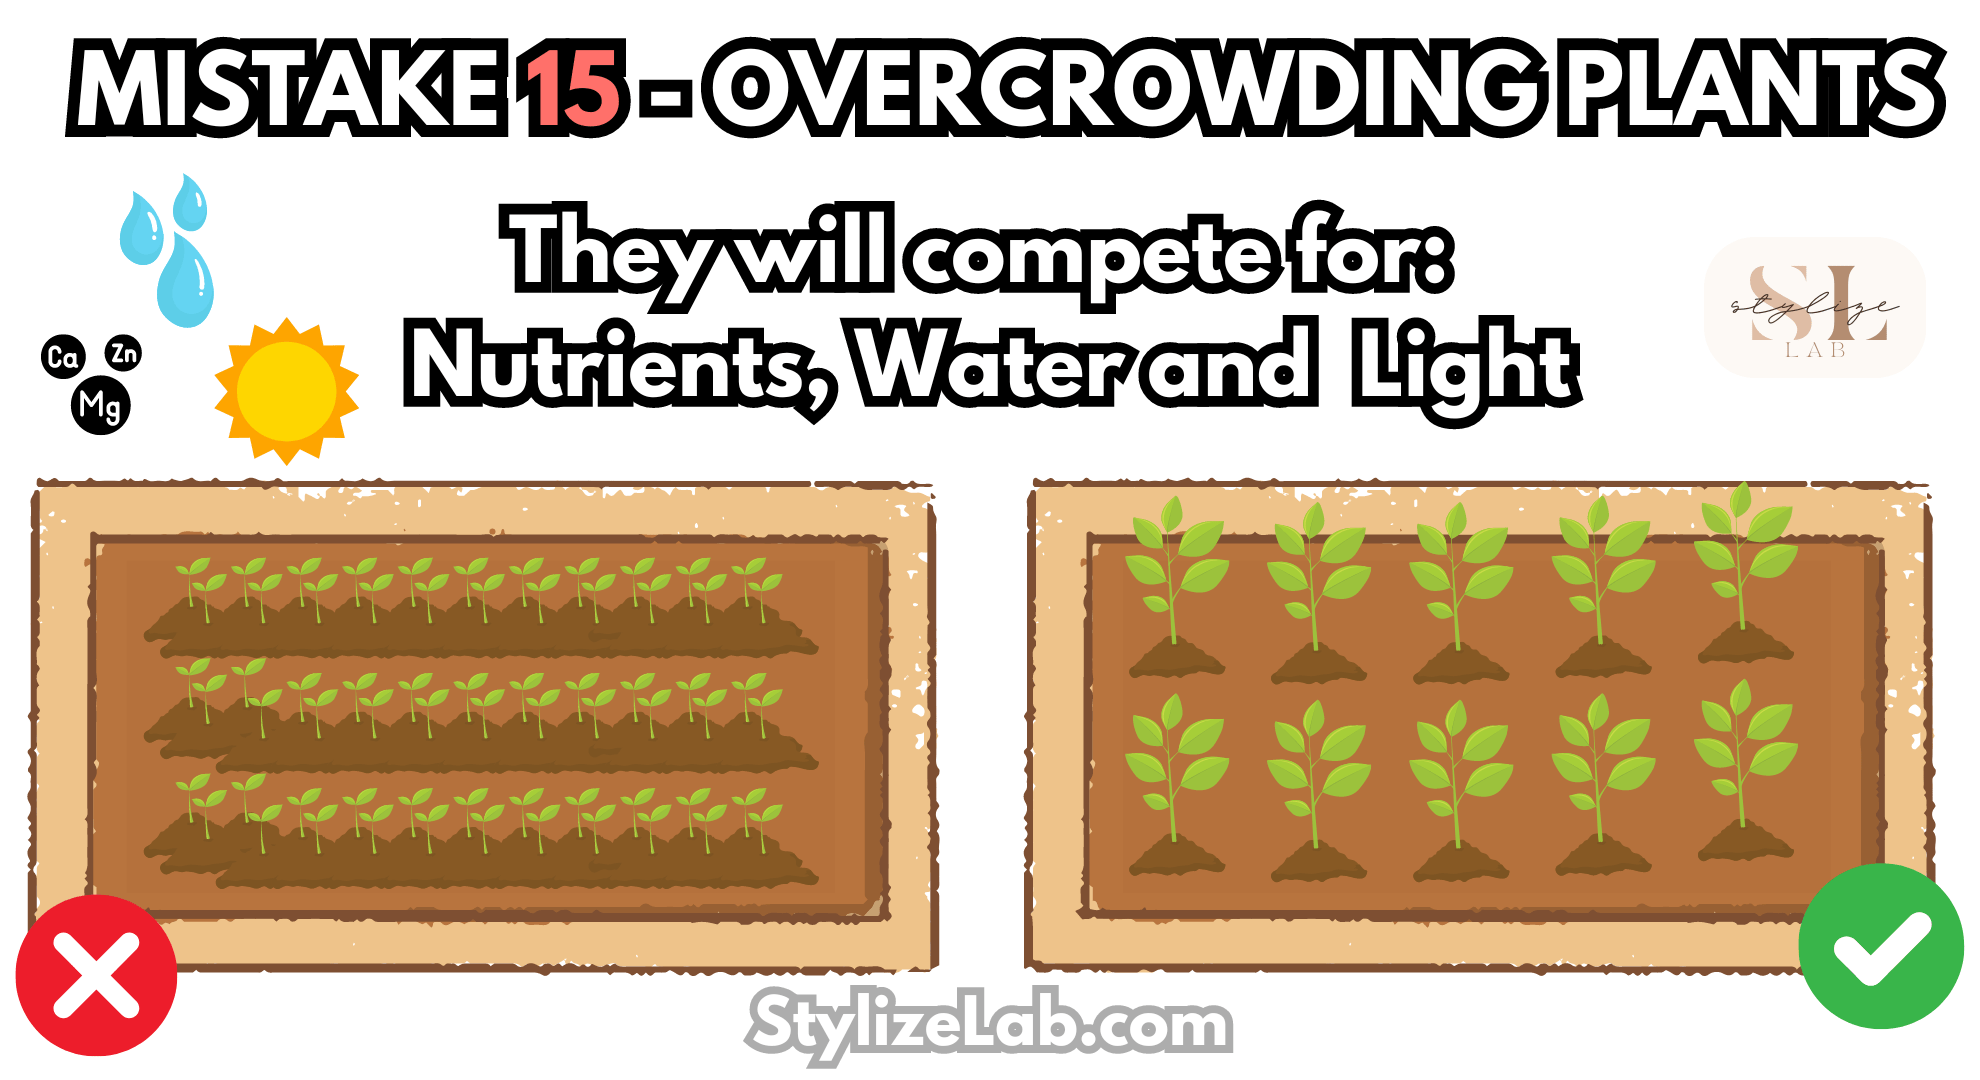 avoid Overcrowding Plants